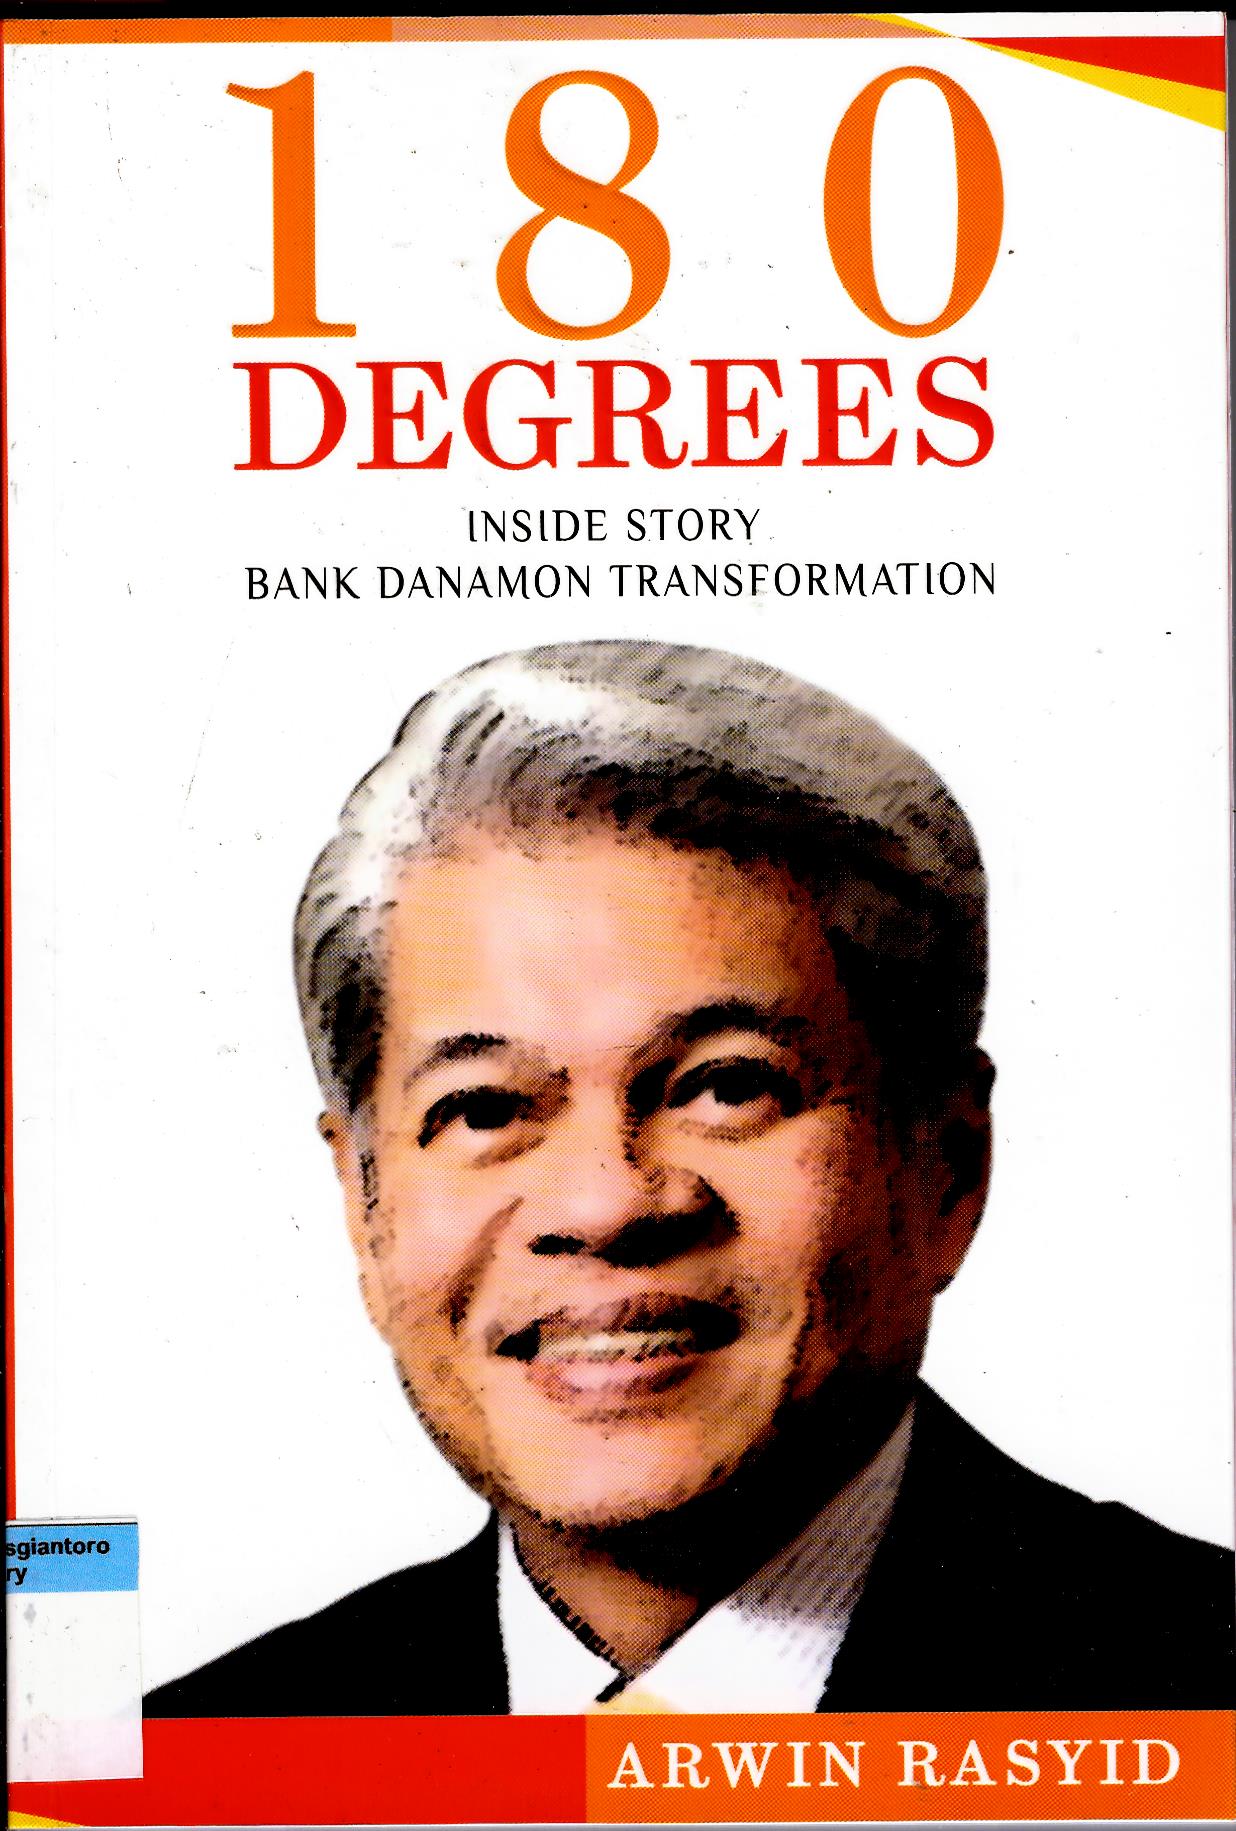 180 degrees: inside story Bank Danamon transformation